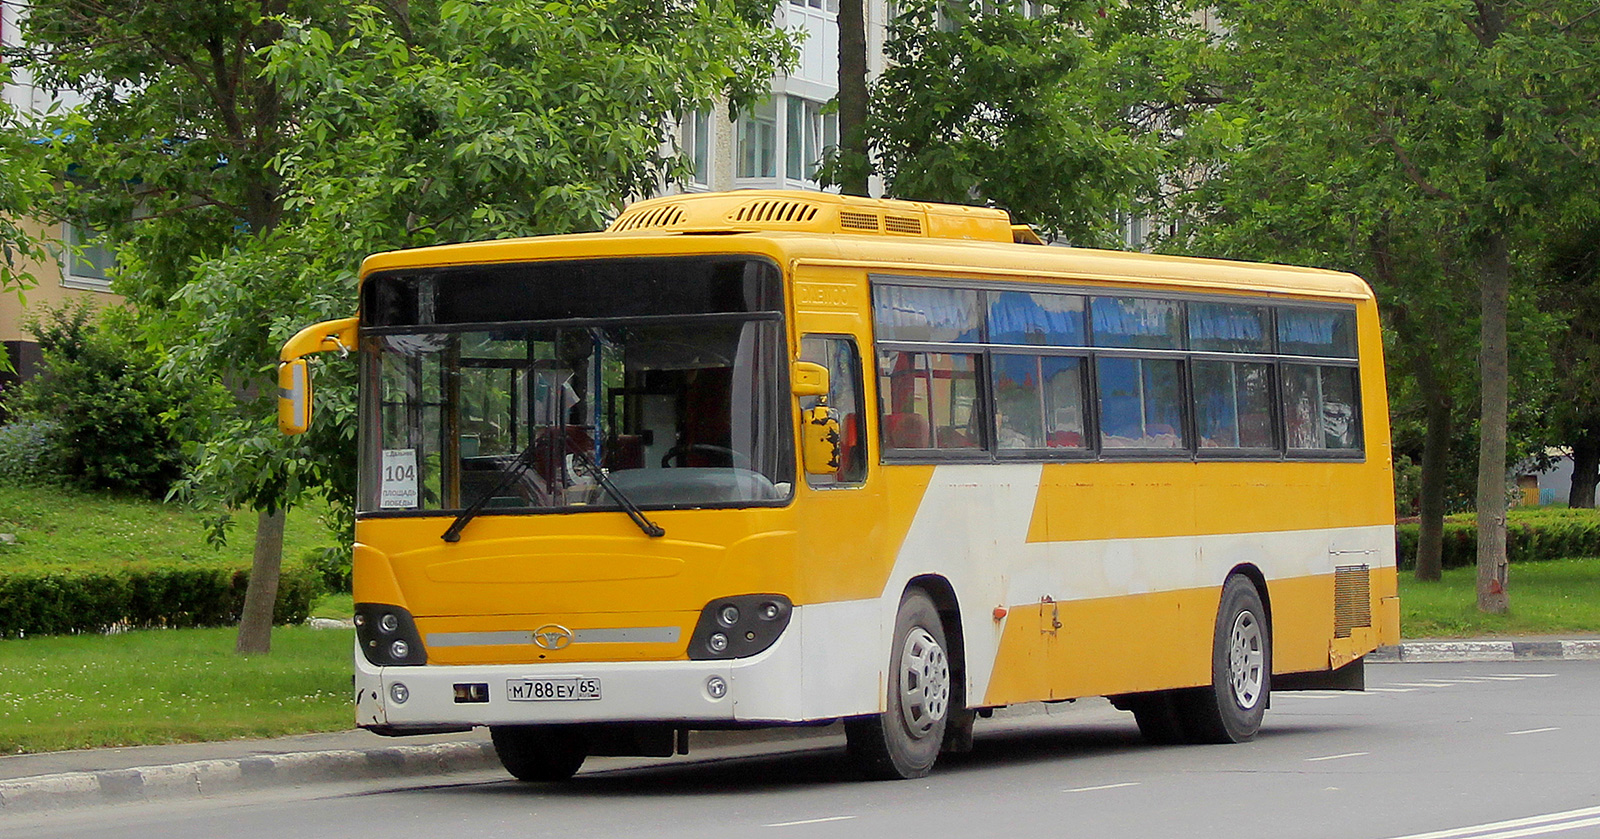 Yzhno-Sahalinsk, Daewoo BS106 №: М 788 ЕУ 65